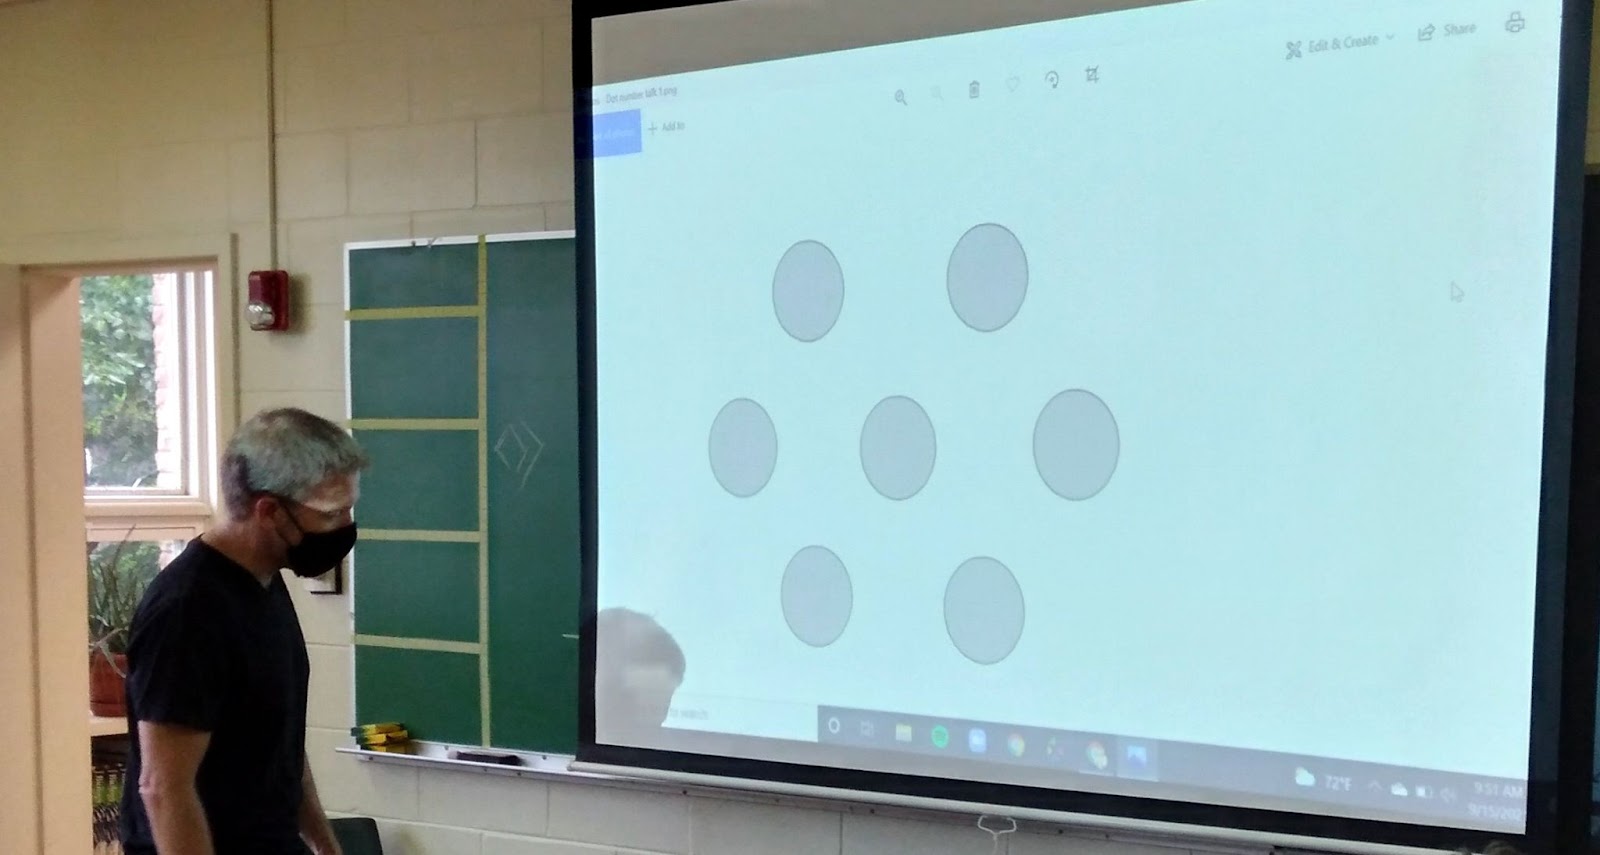 Teacher shows math exercise on a projector screen